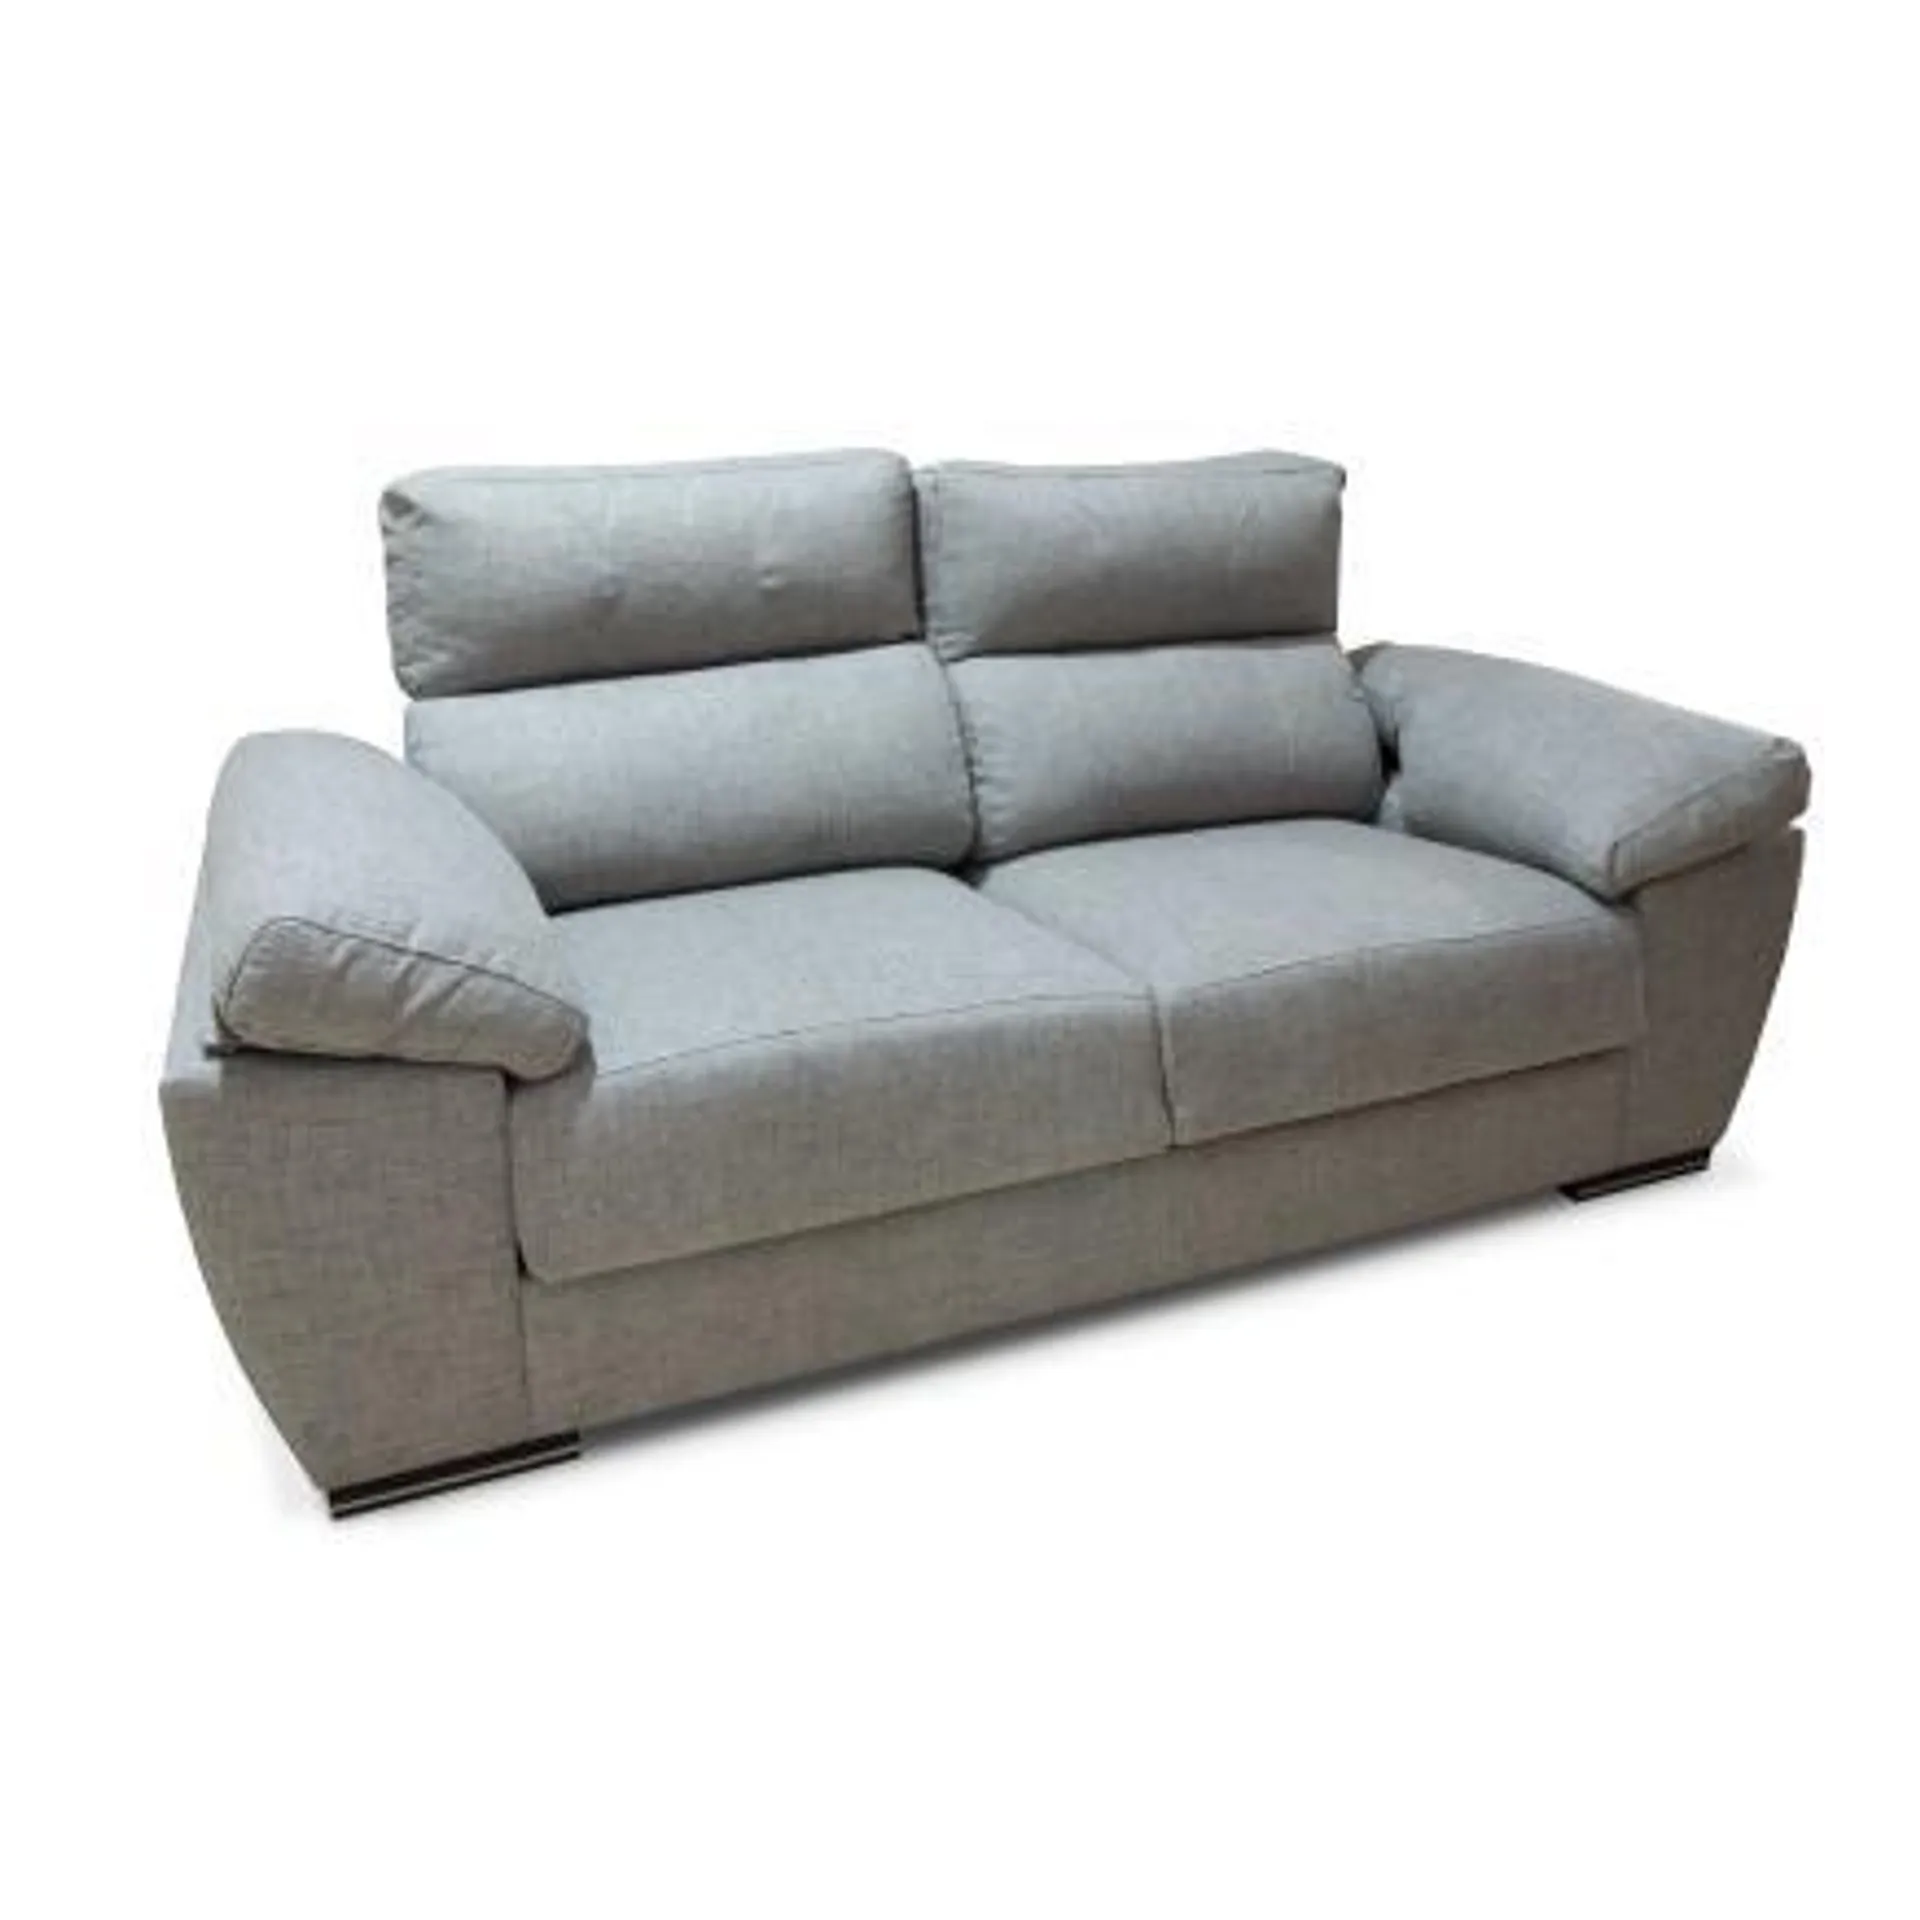 Elegante sofá en color gris, mod. Roi